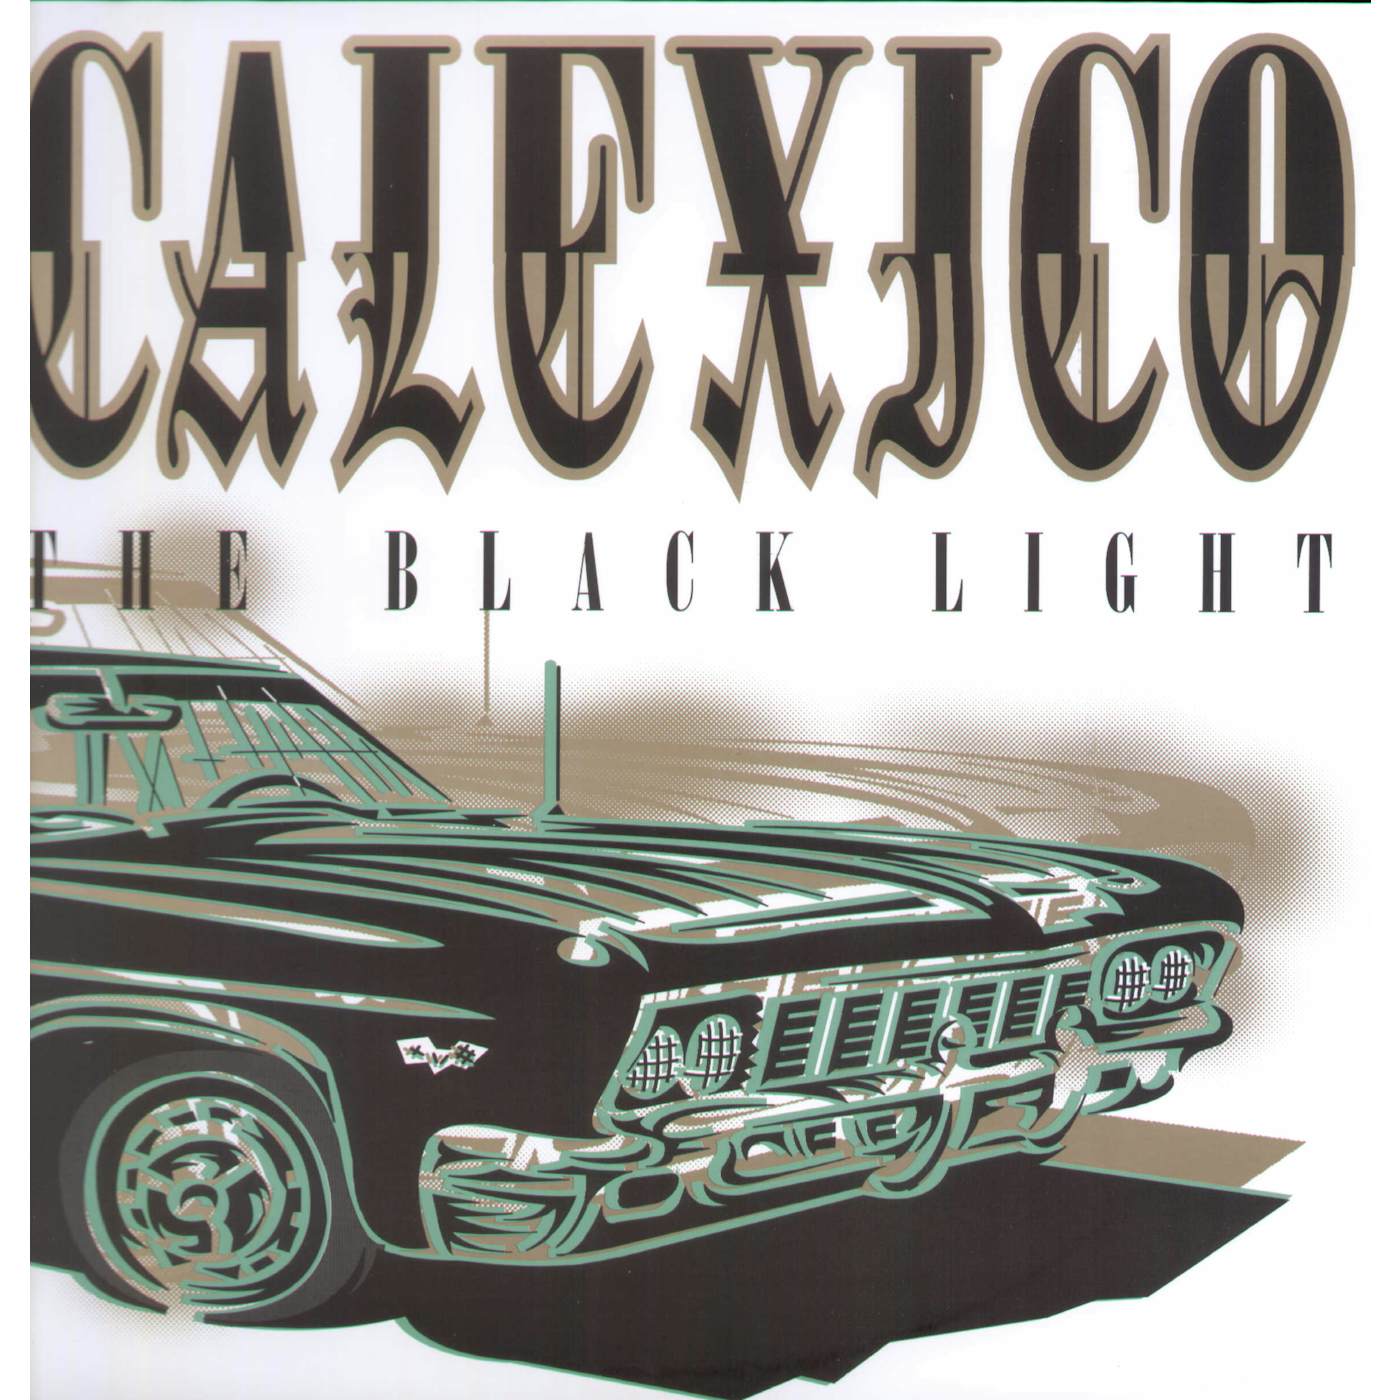 Calexico BLACK LIGHT Vinyl Record